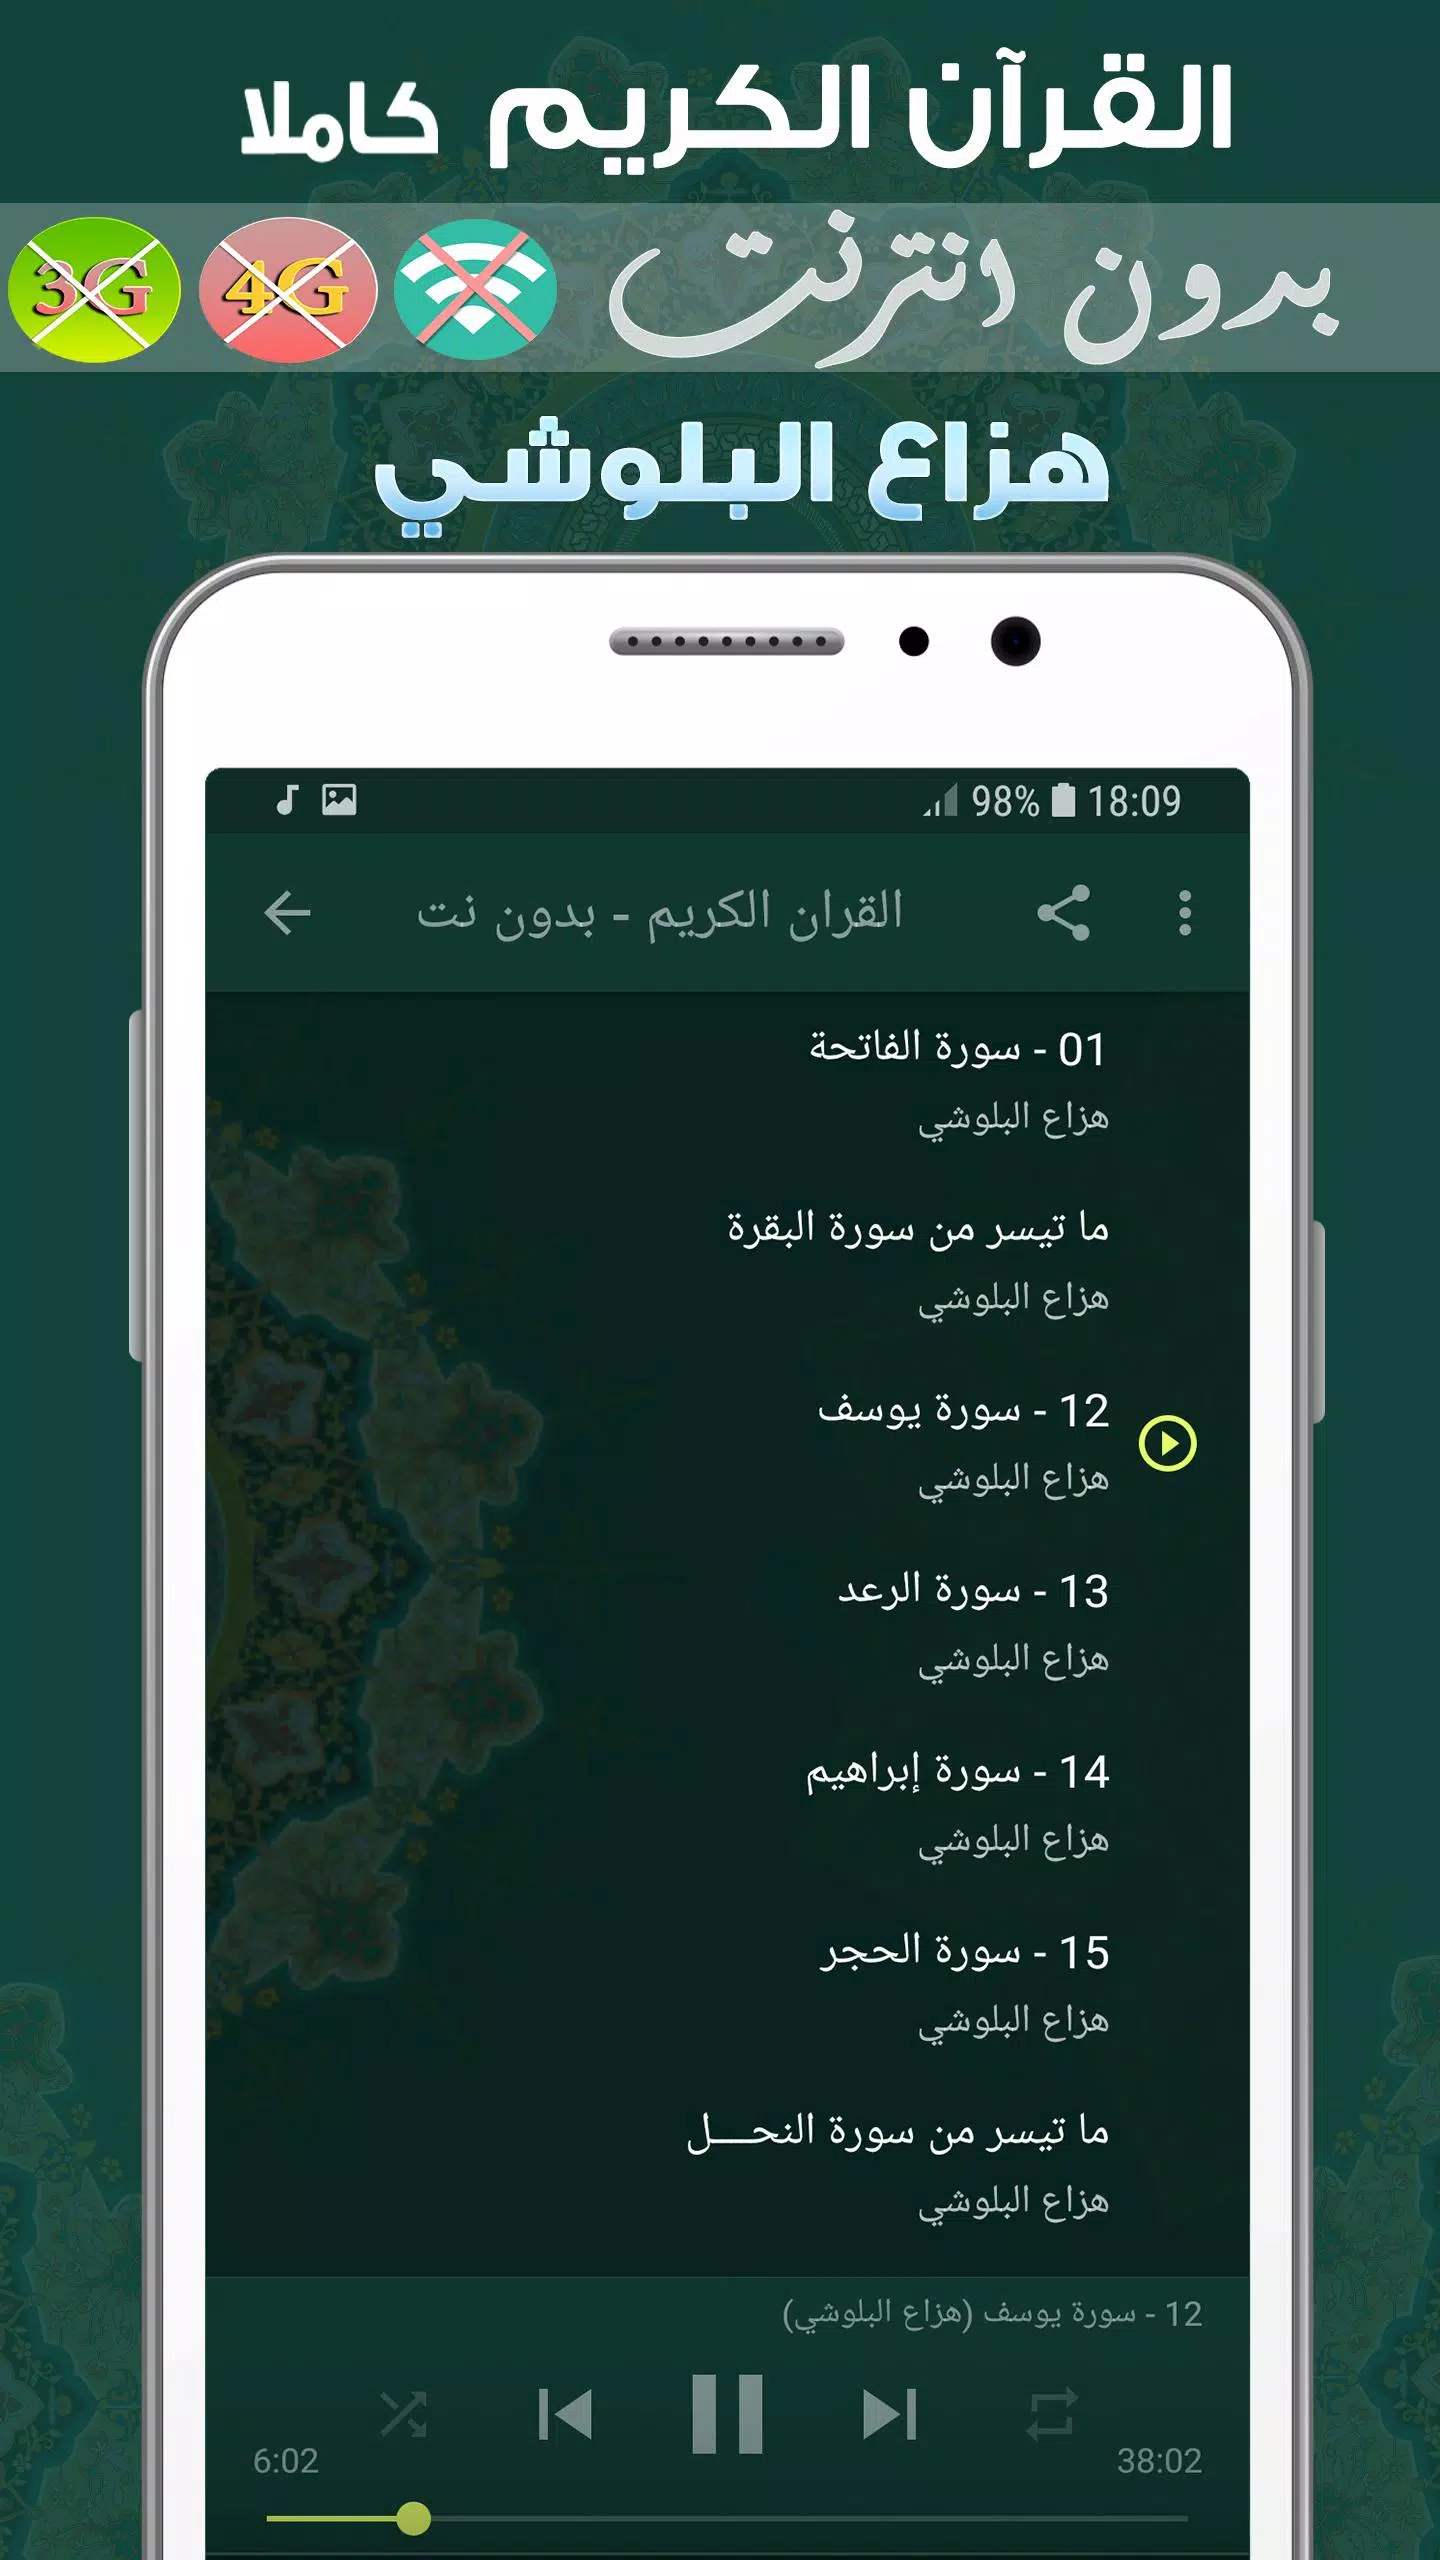 Hazza Al Balushi Quran MP3 Offline for Android - APK Download